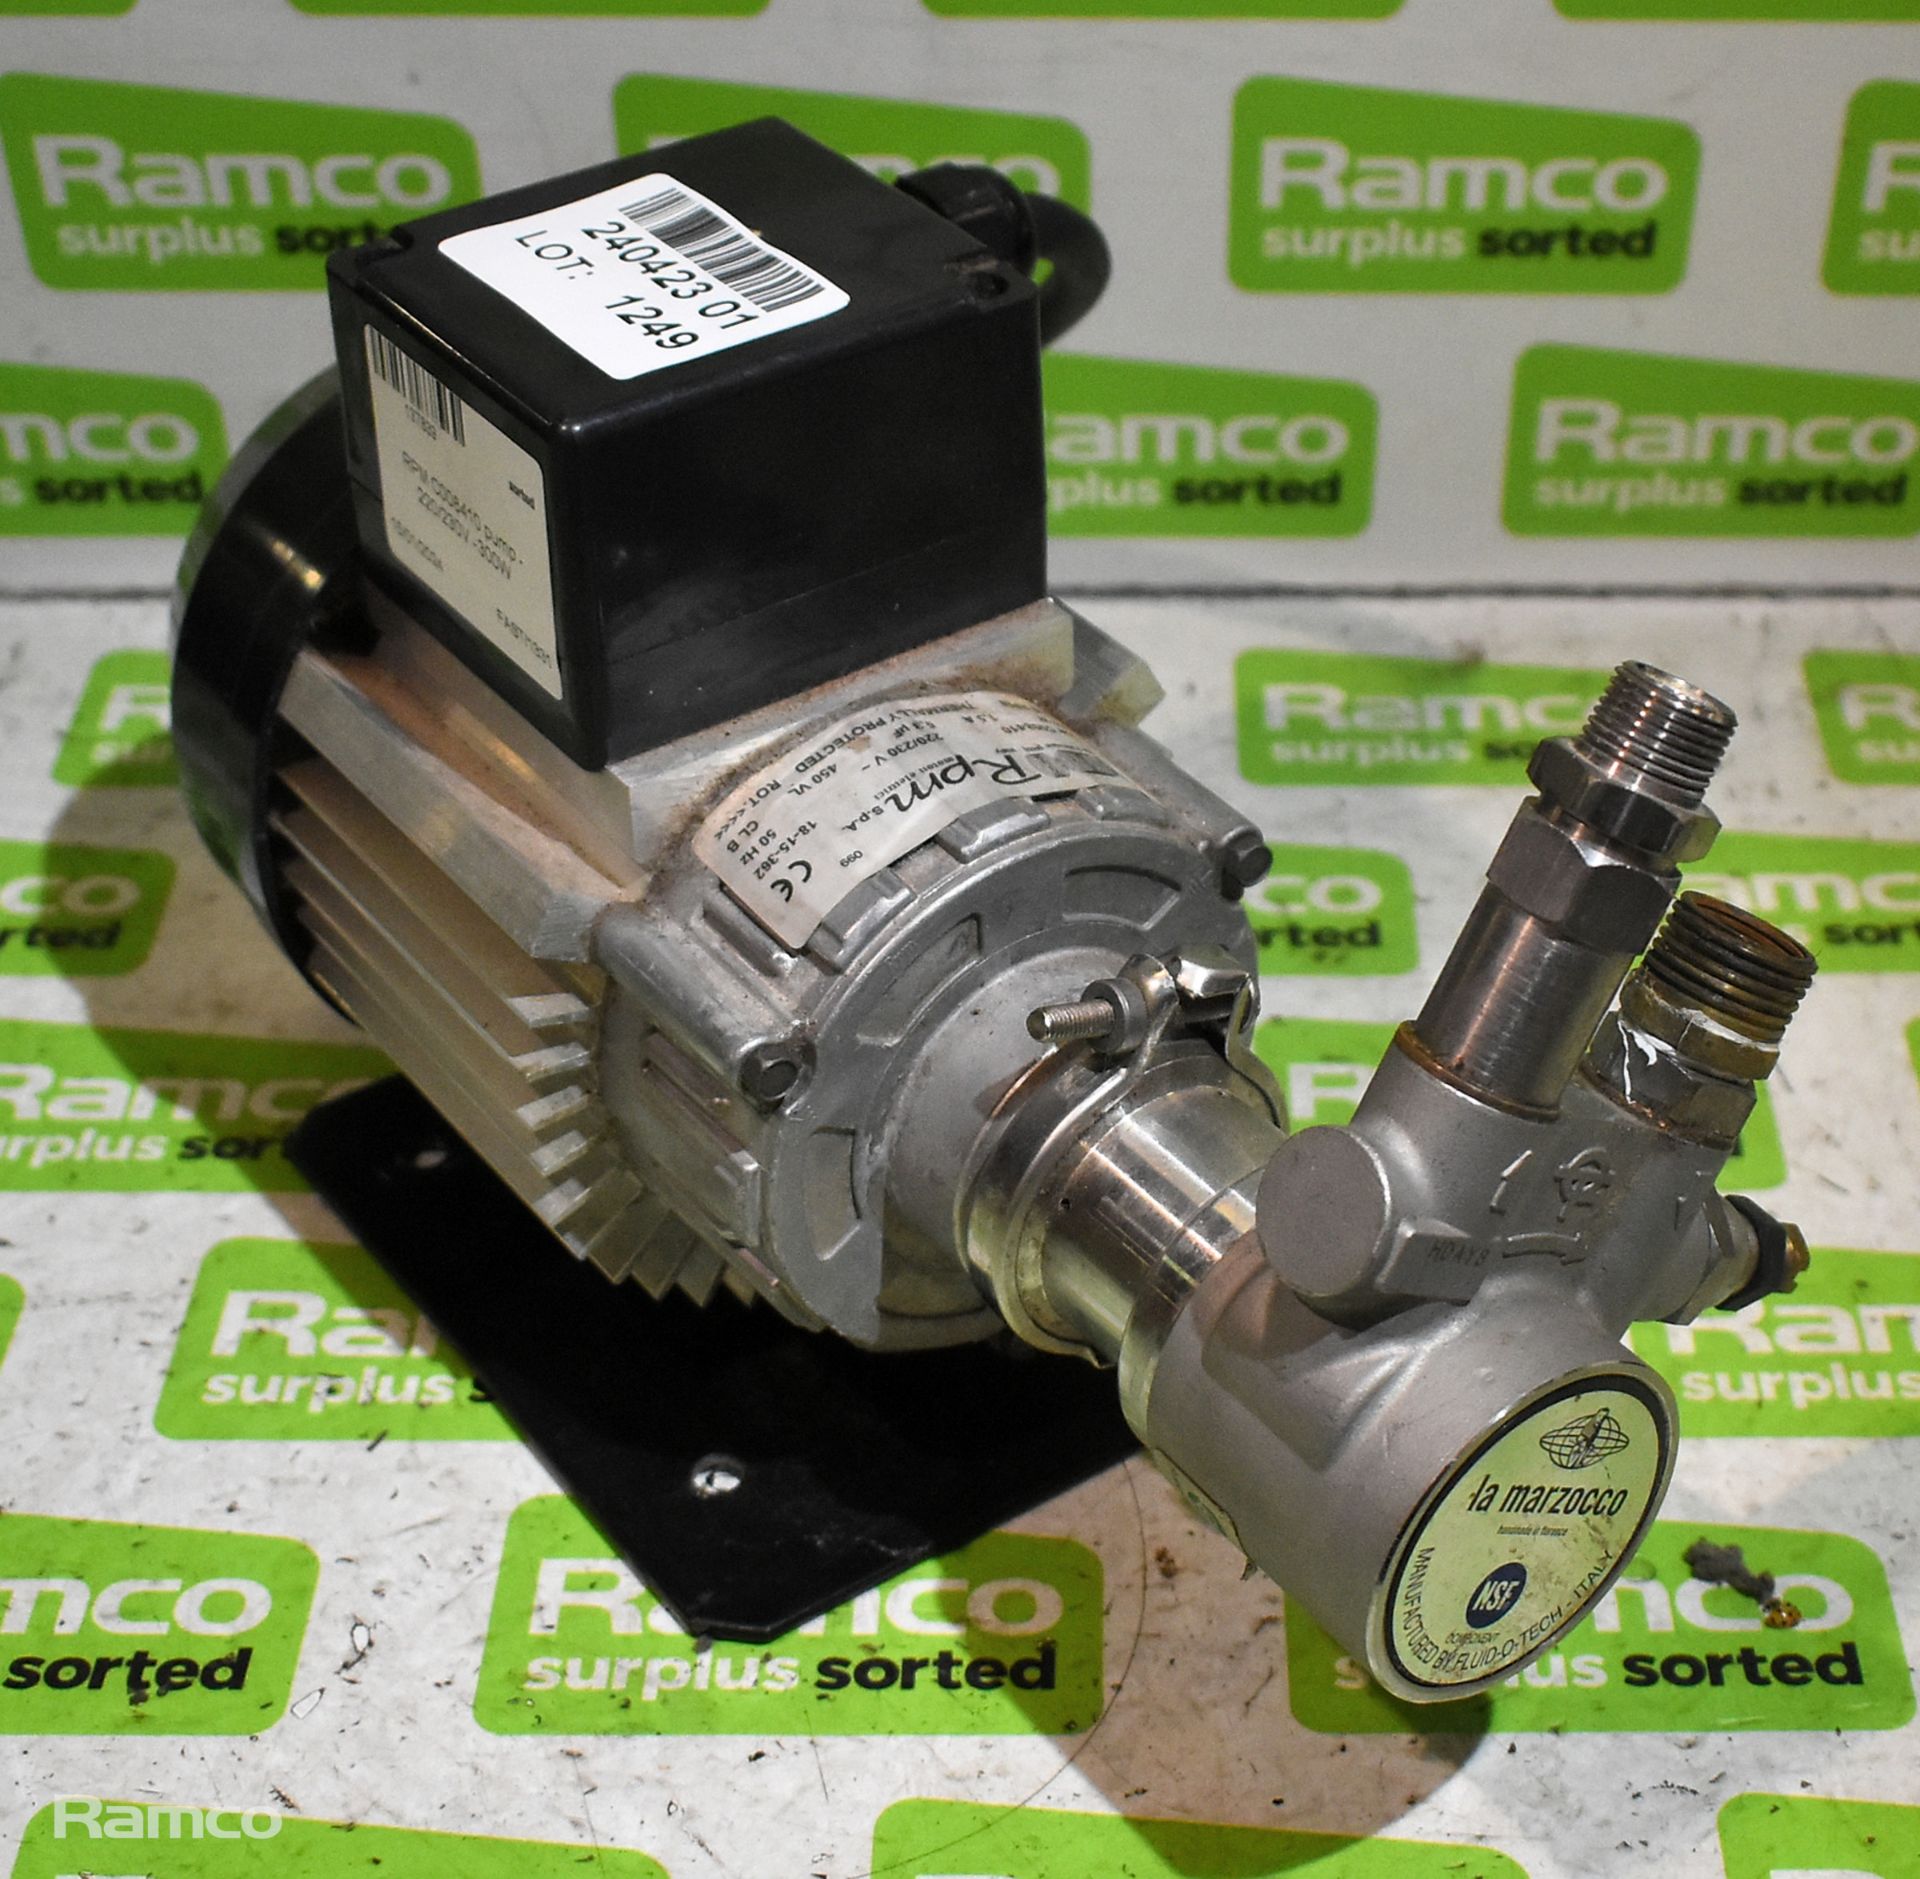 RPM C008410 pump - 220/230V - 300W - Image 2 of 5